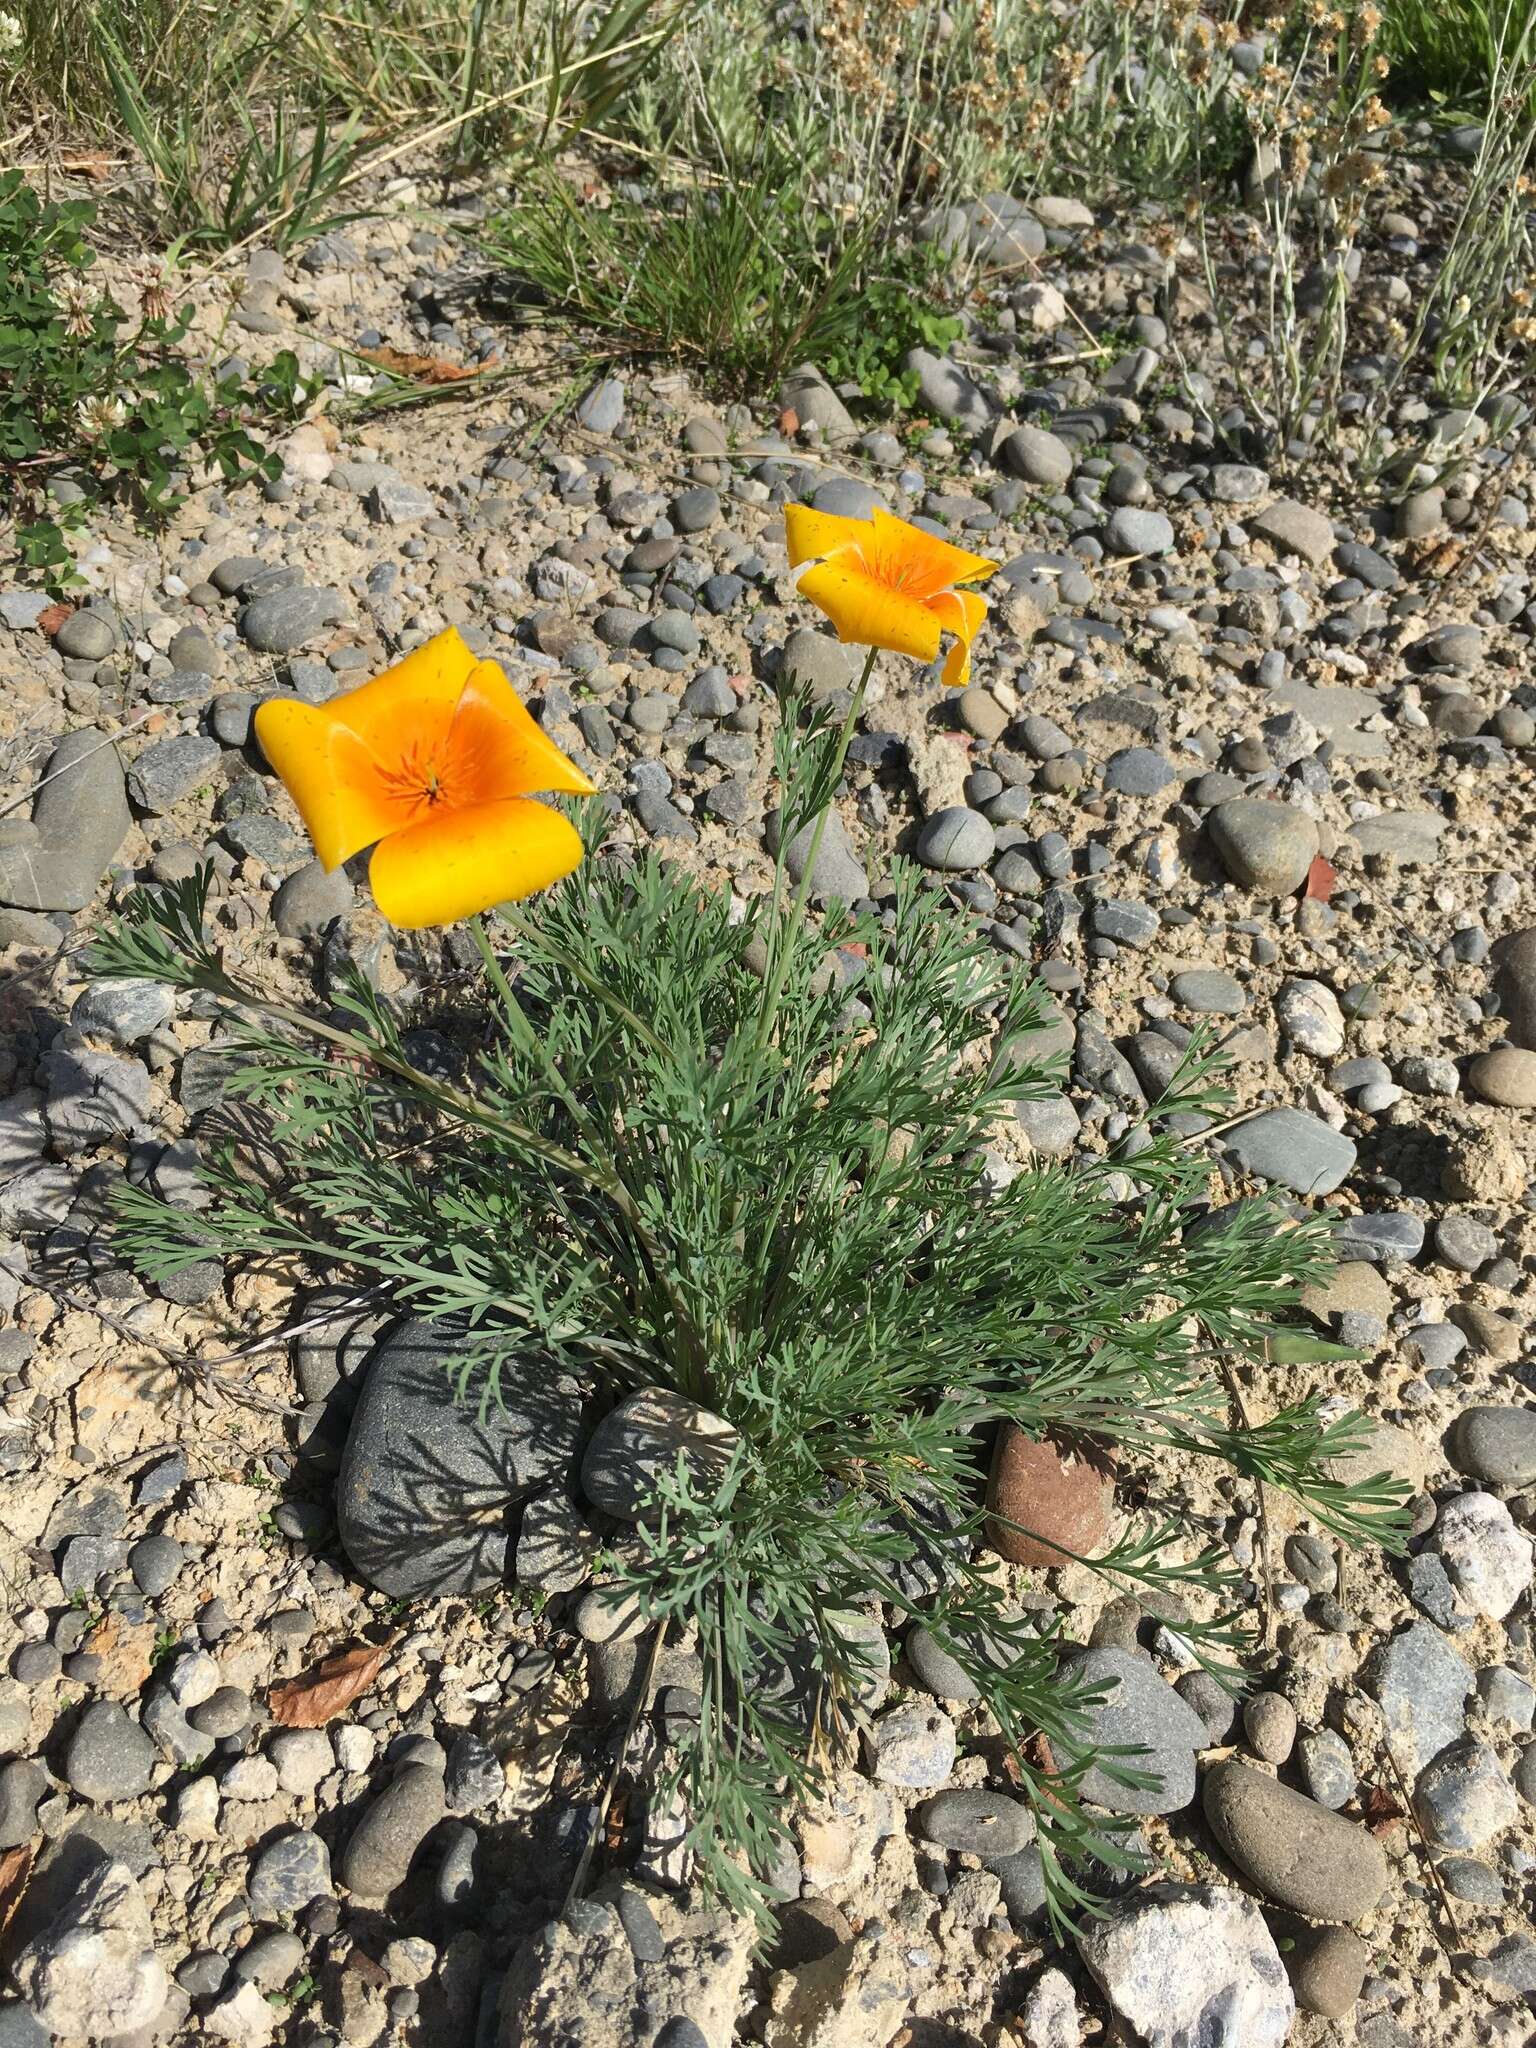 Image de Eschscholzia californica subsp. californica